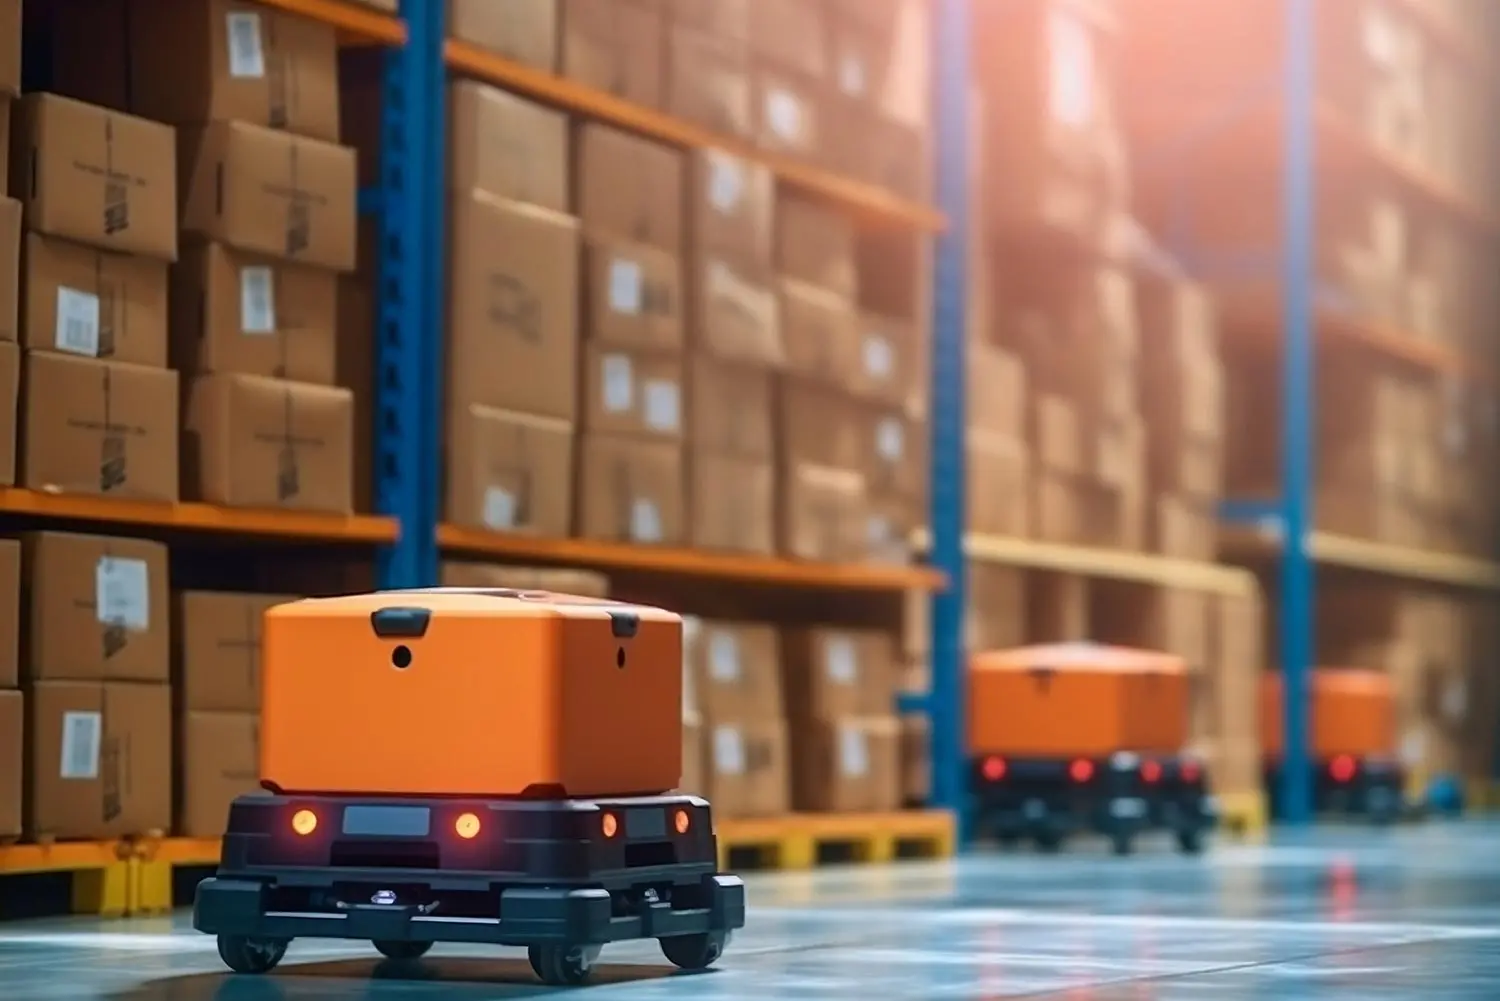 The Future Warehouse Requires Robotics Implementation